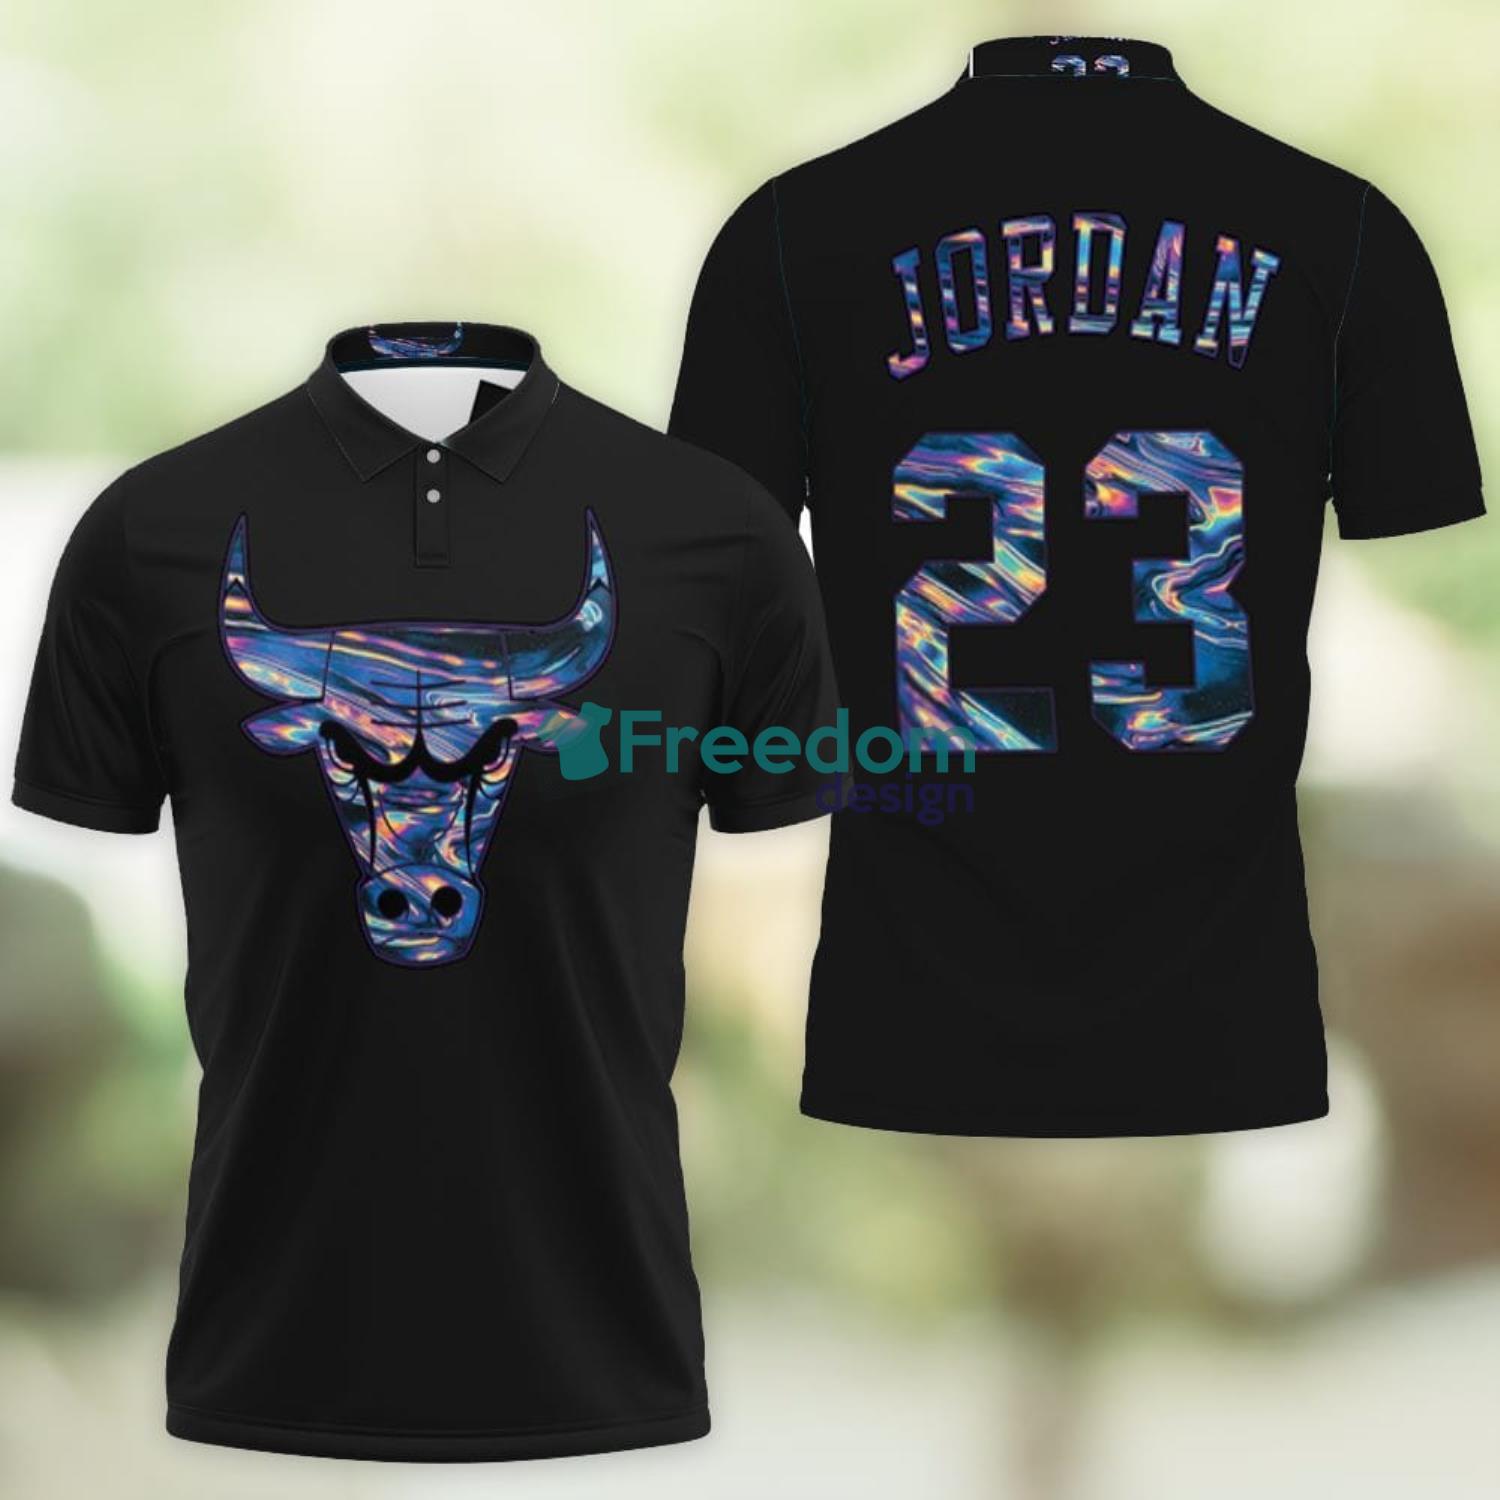 Yordan That's It That's The Shirt - Freedomdesign